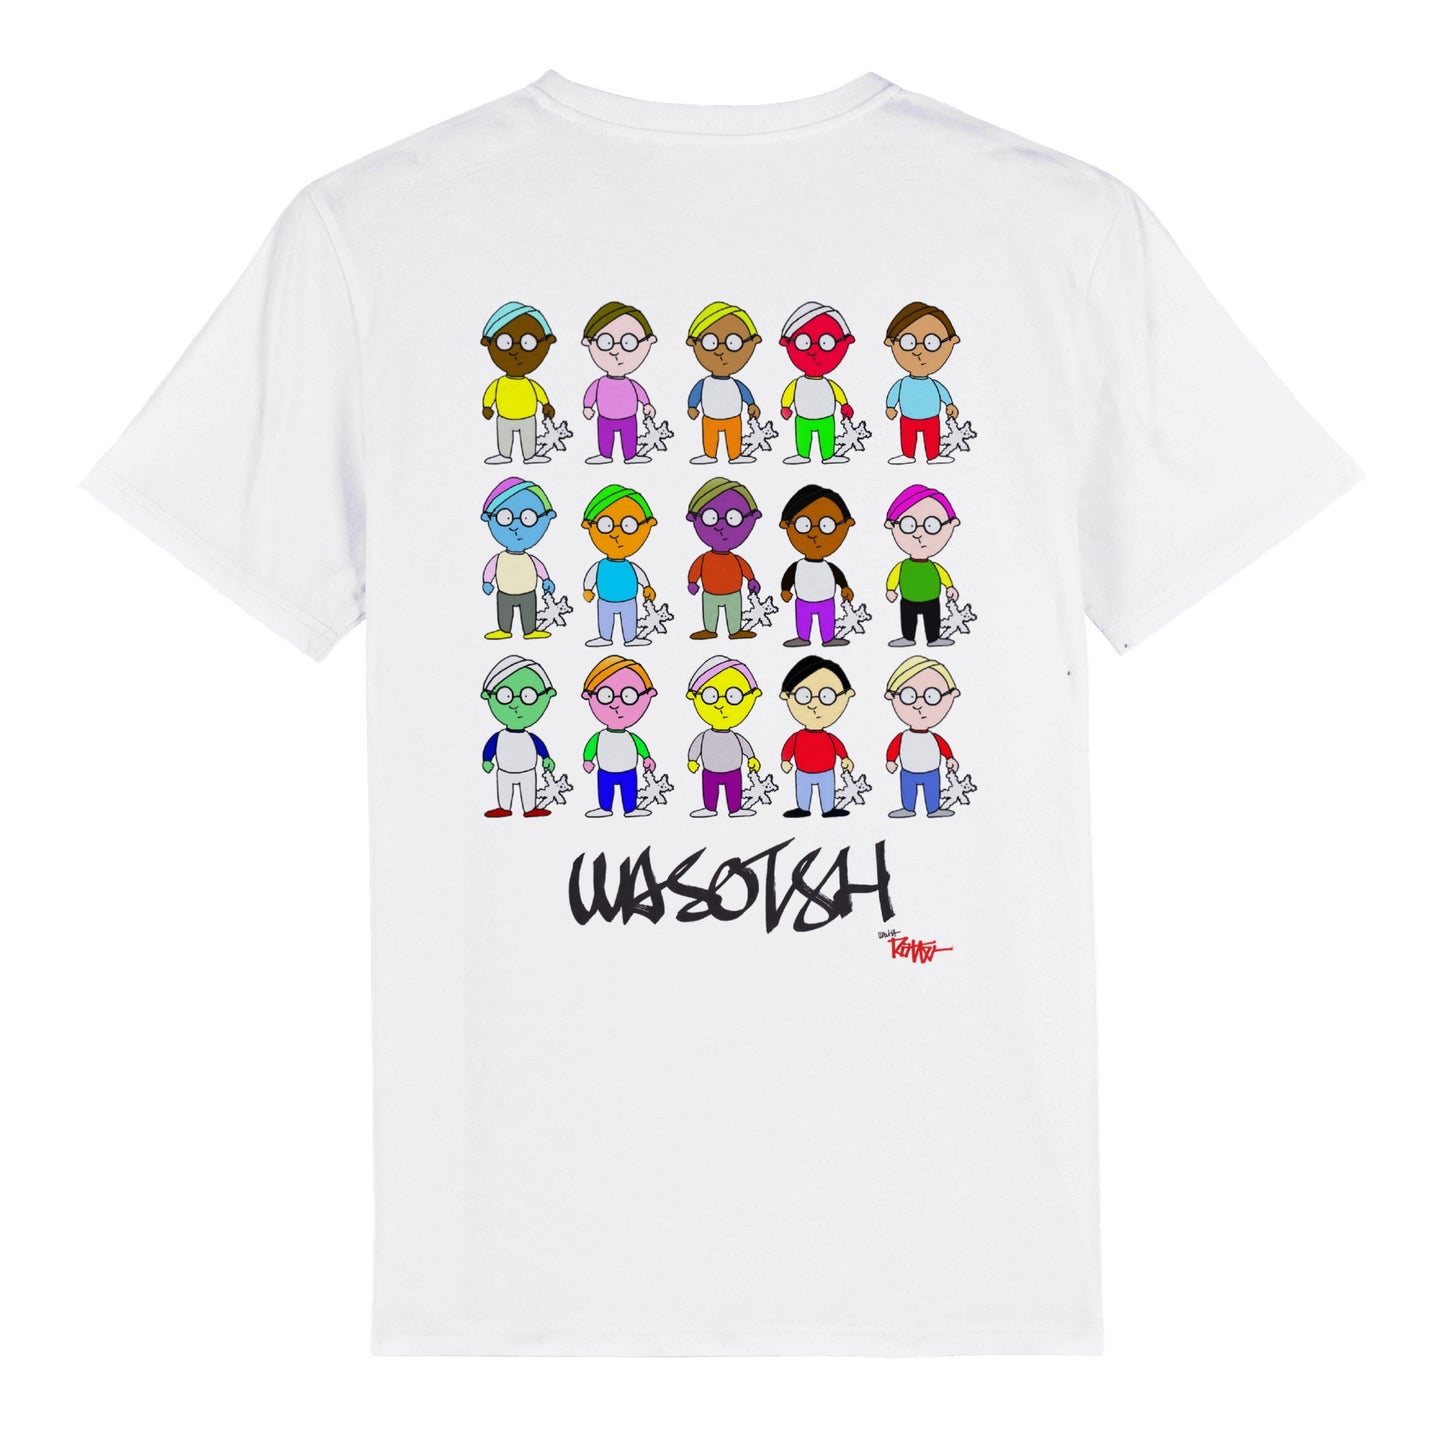 WASOTSH -THEM - オーガニック ユニセックス クルーネック Tシャツ